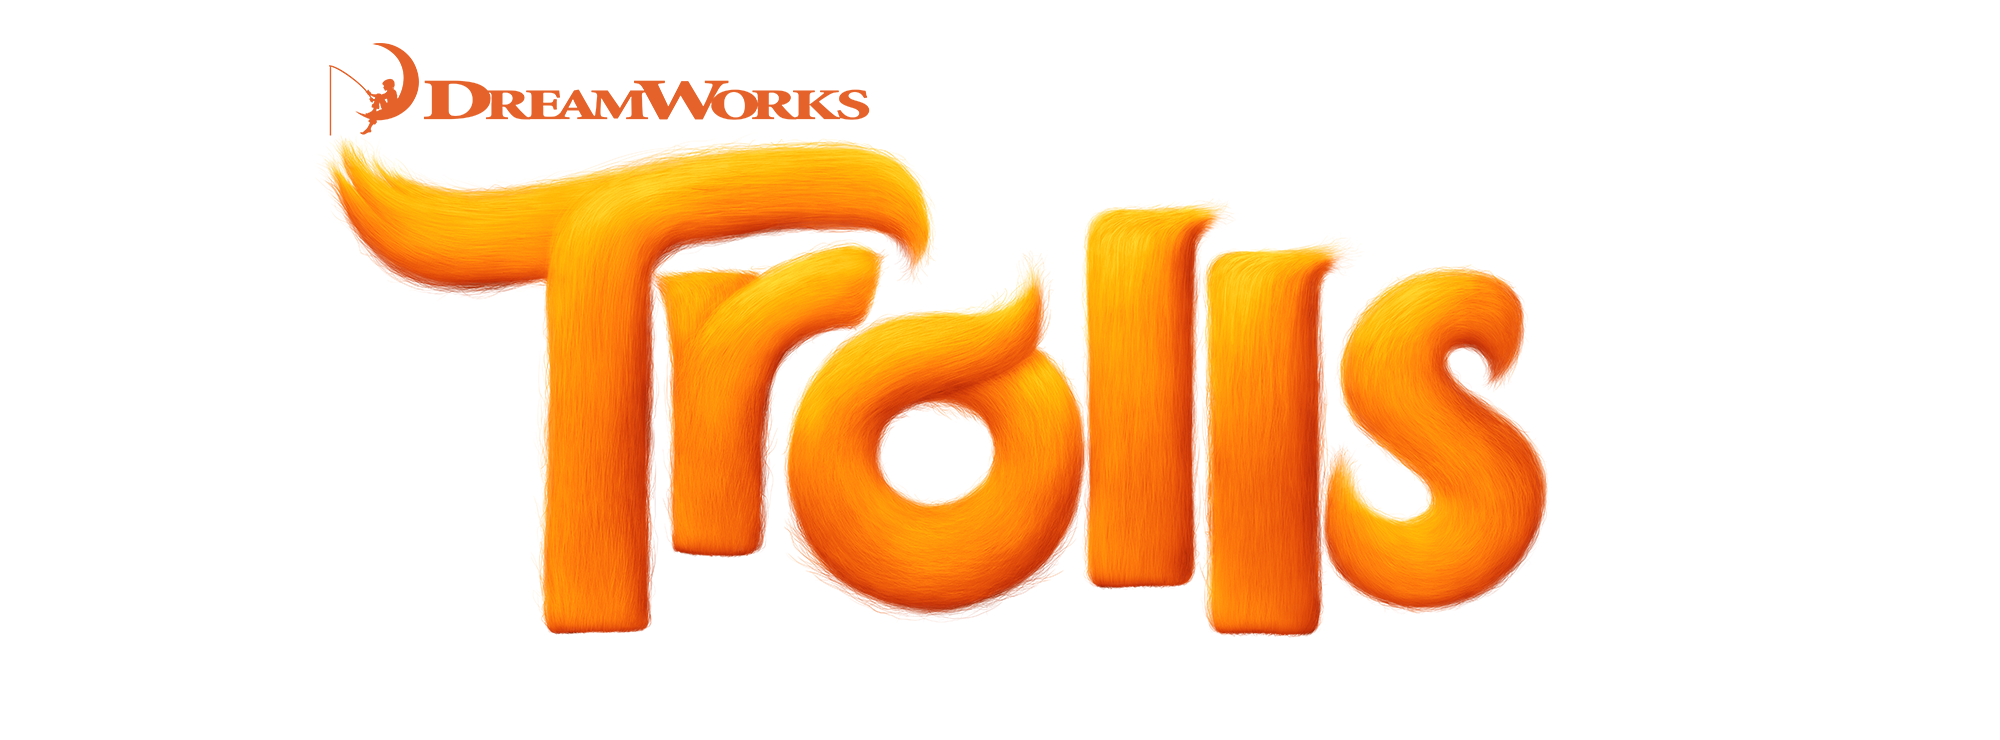 dreamworks-trolls